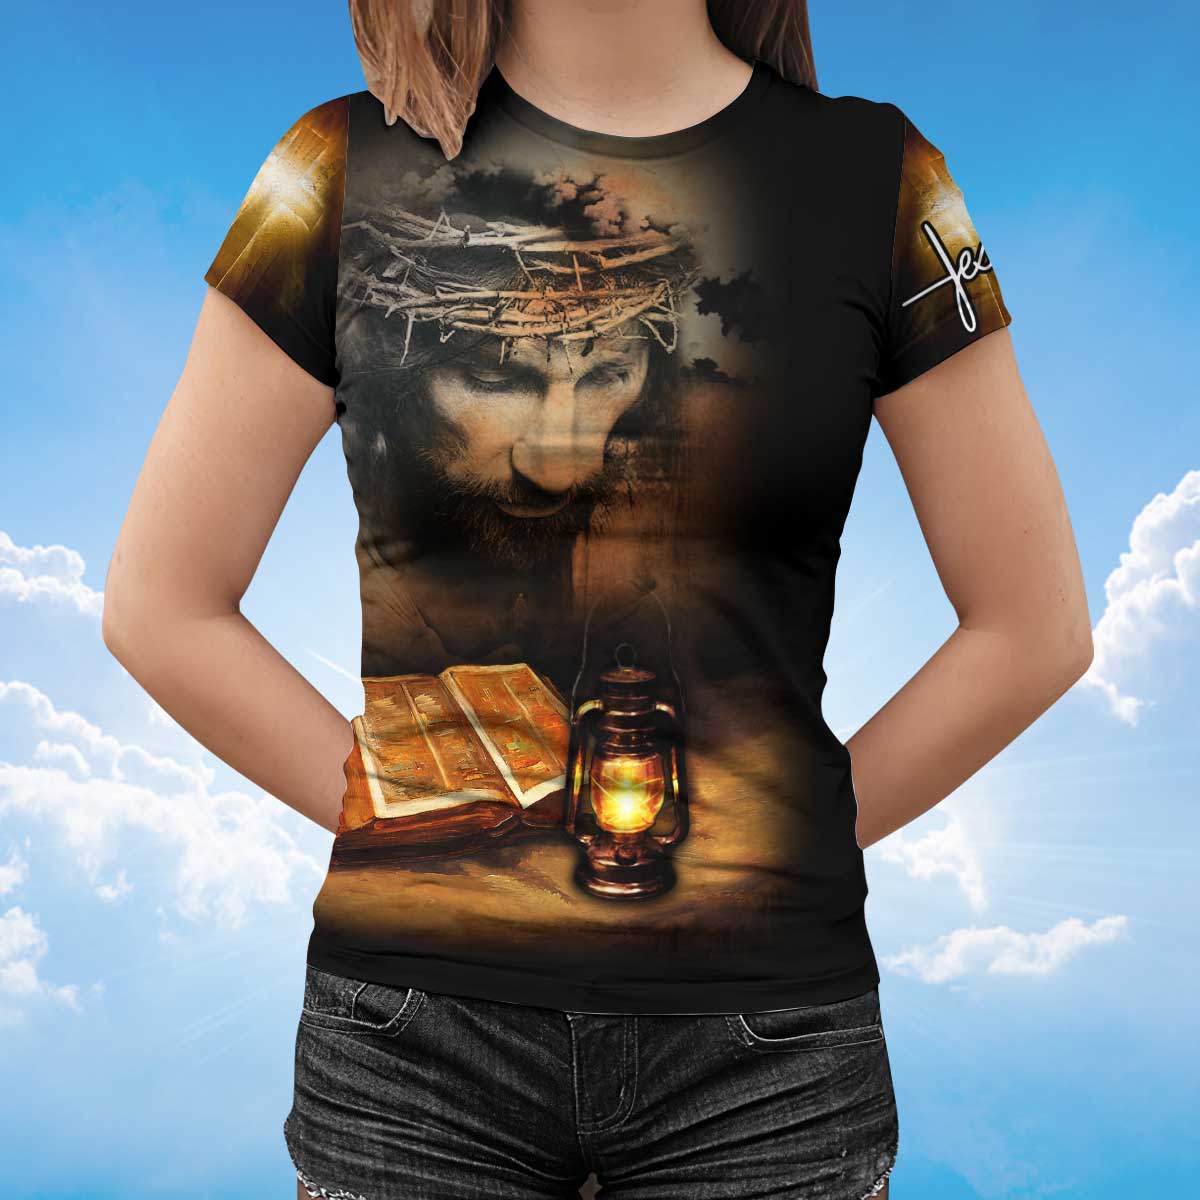 3D All Over Printed God Jesus Unisex T Shirt Be The Light Christian Jesus Shirt